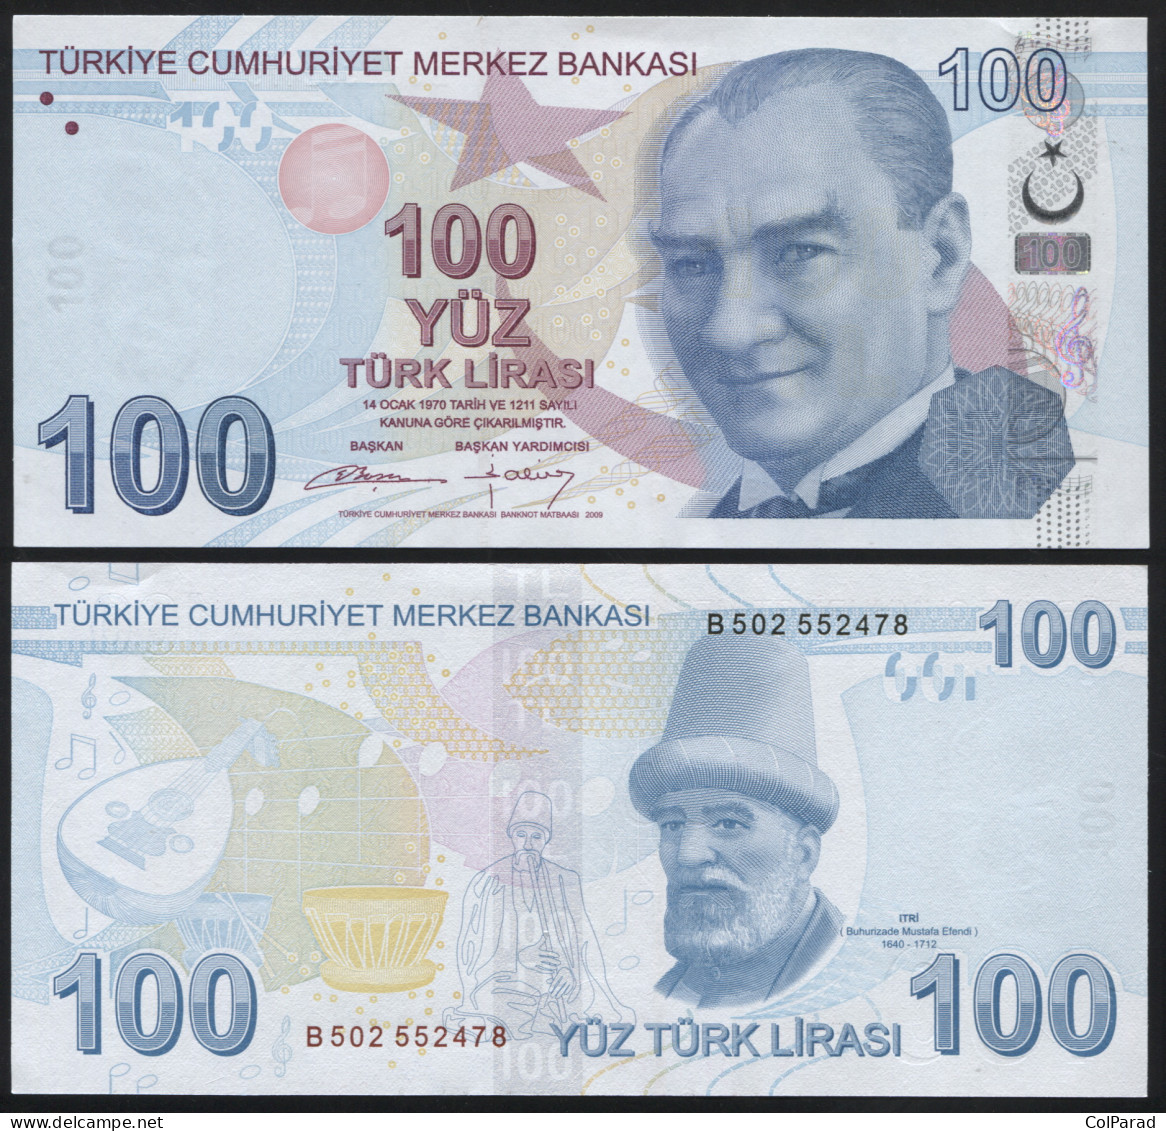 TURKEY 100 TÜRK LIRASI - 2009 (2012) - Paper Unc - P.226b Banknote - Turquie